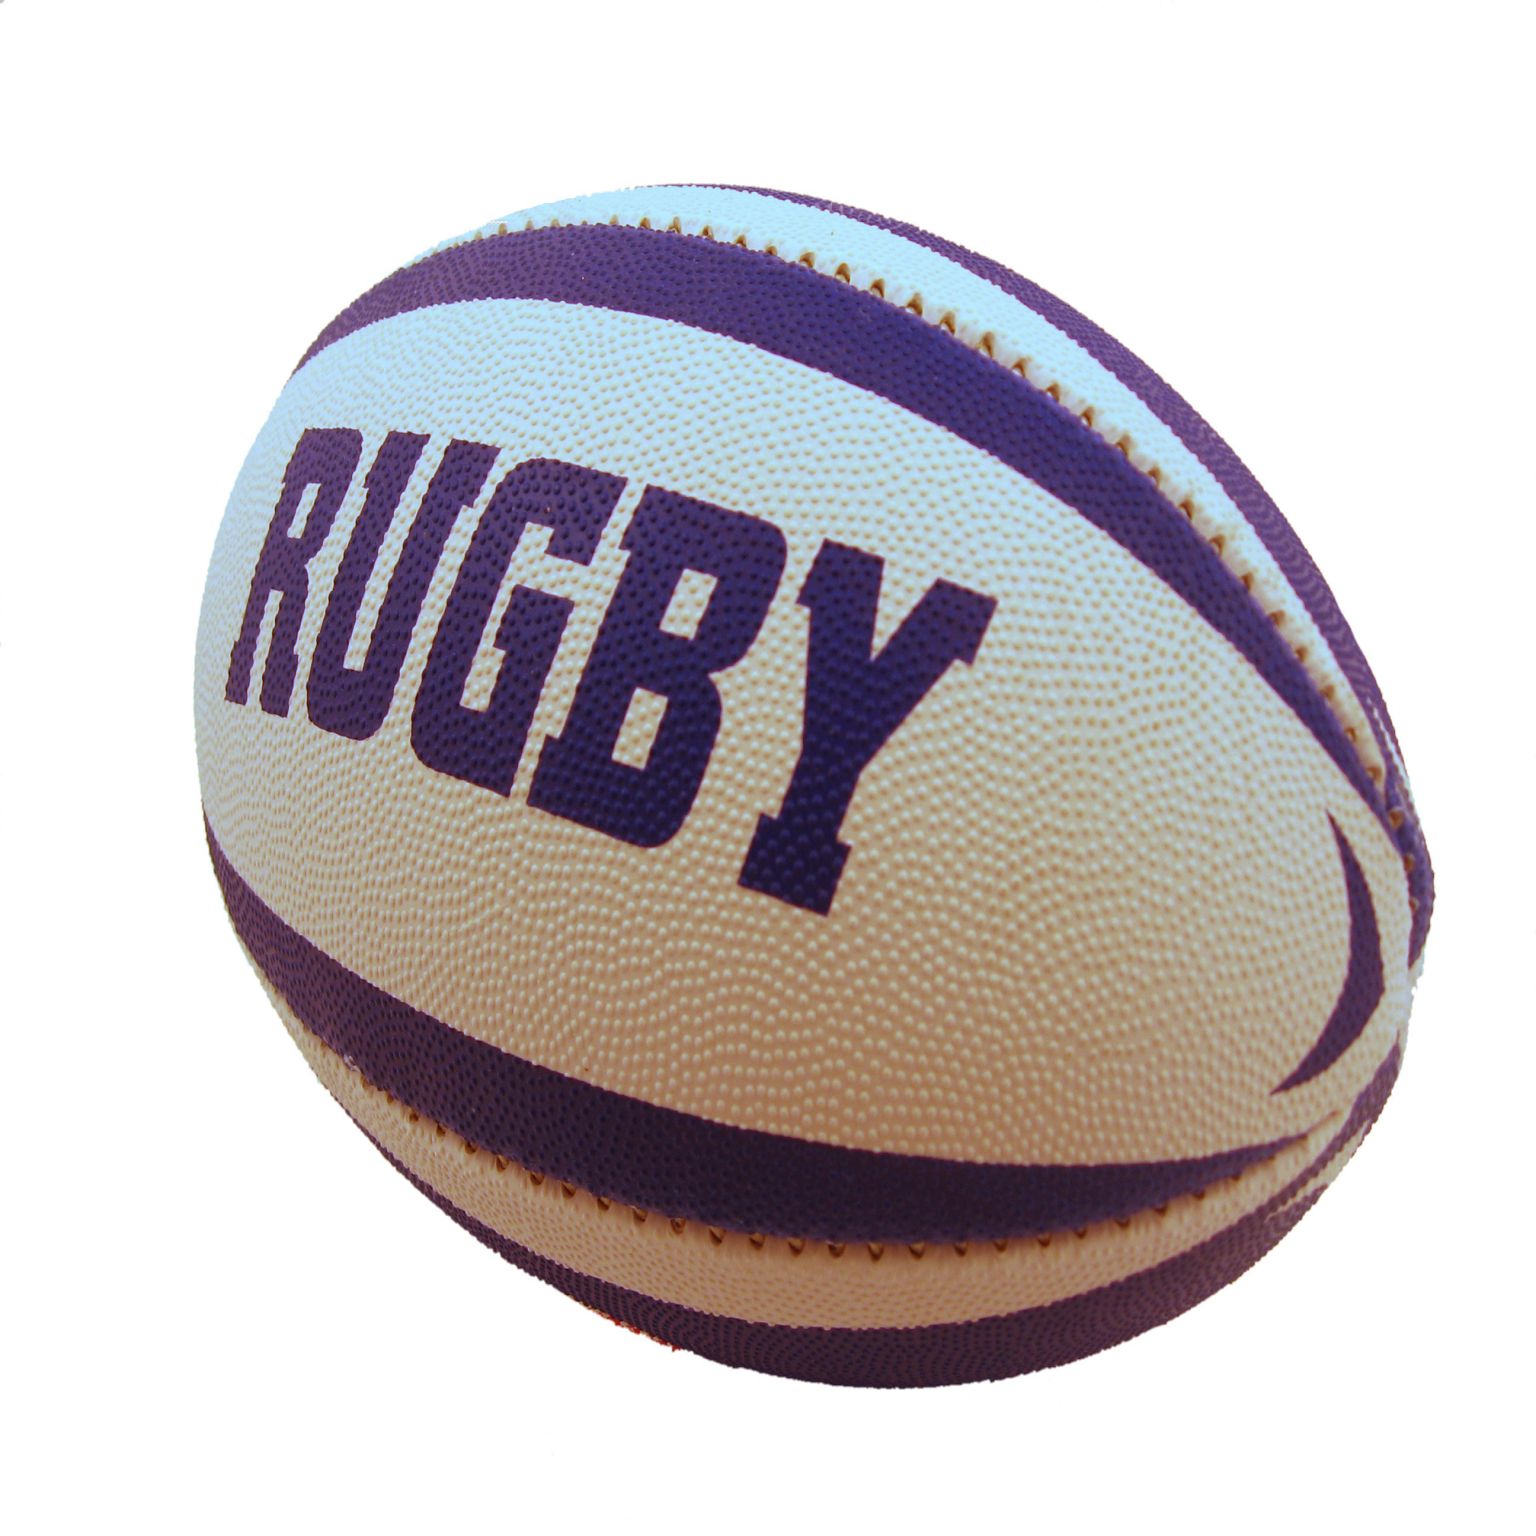 le ballon ovale du rugby